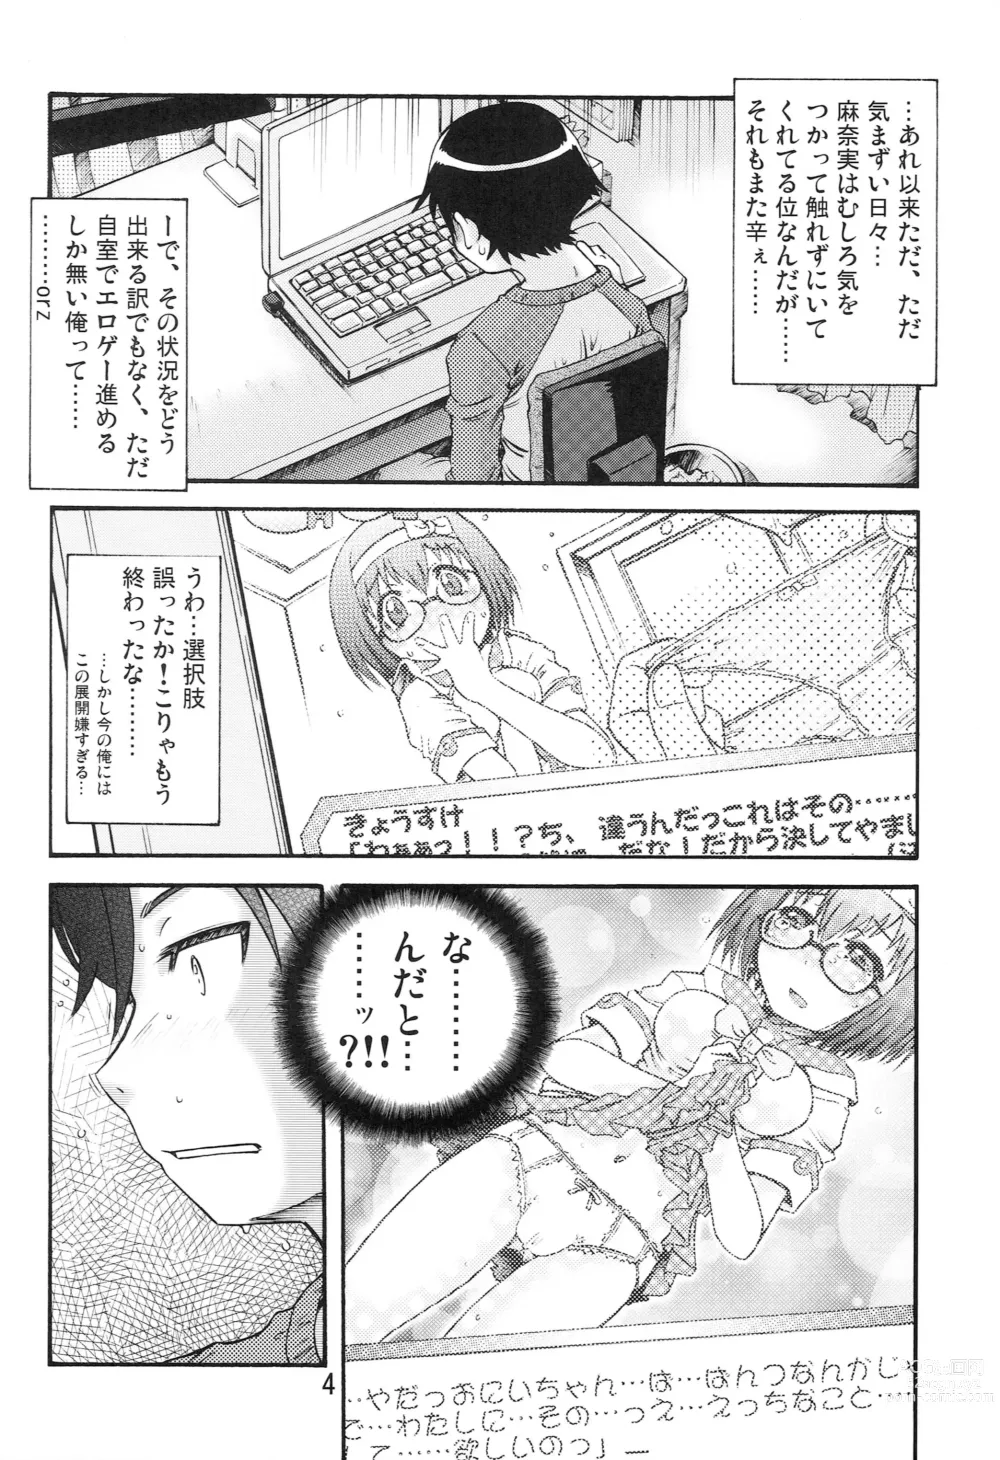 Page 3 of doujinshi Nama! Mana